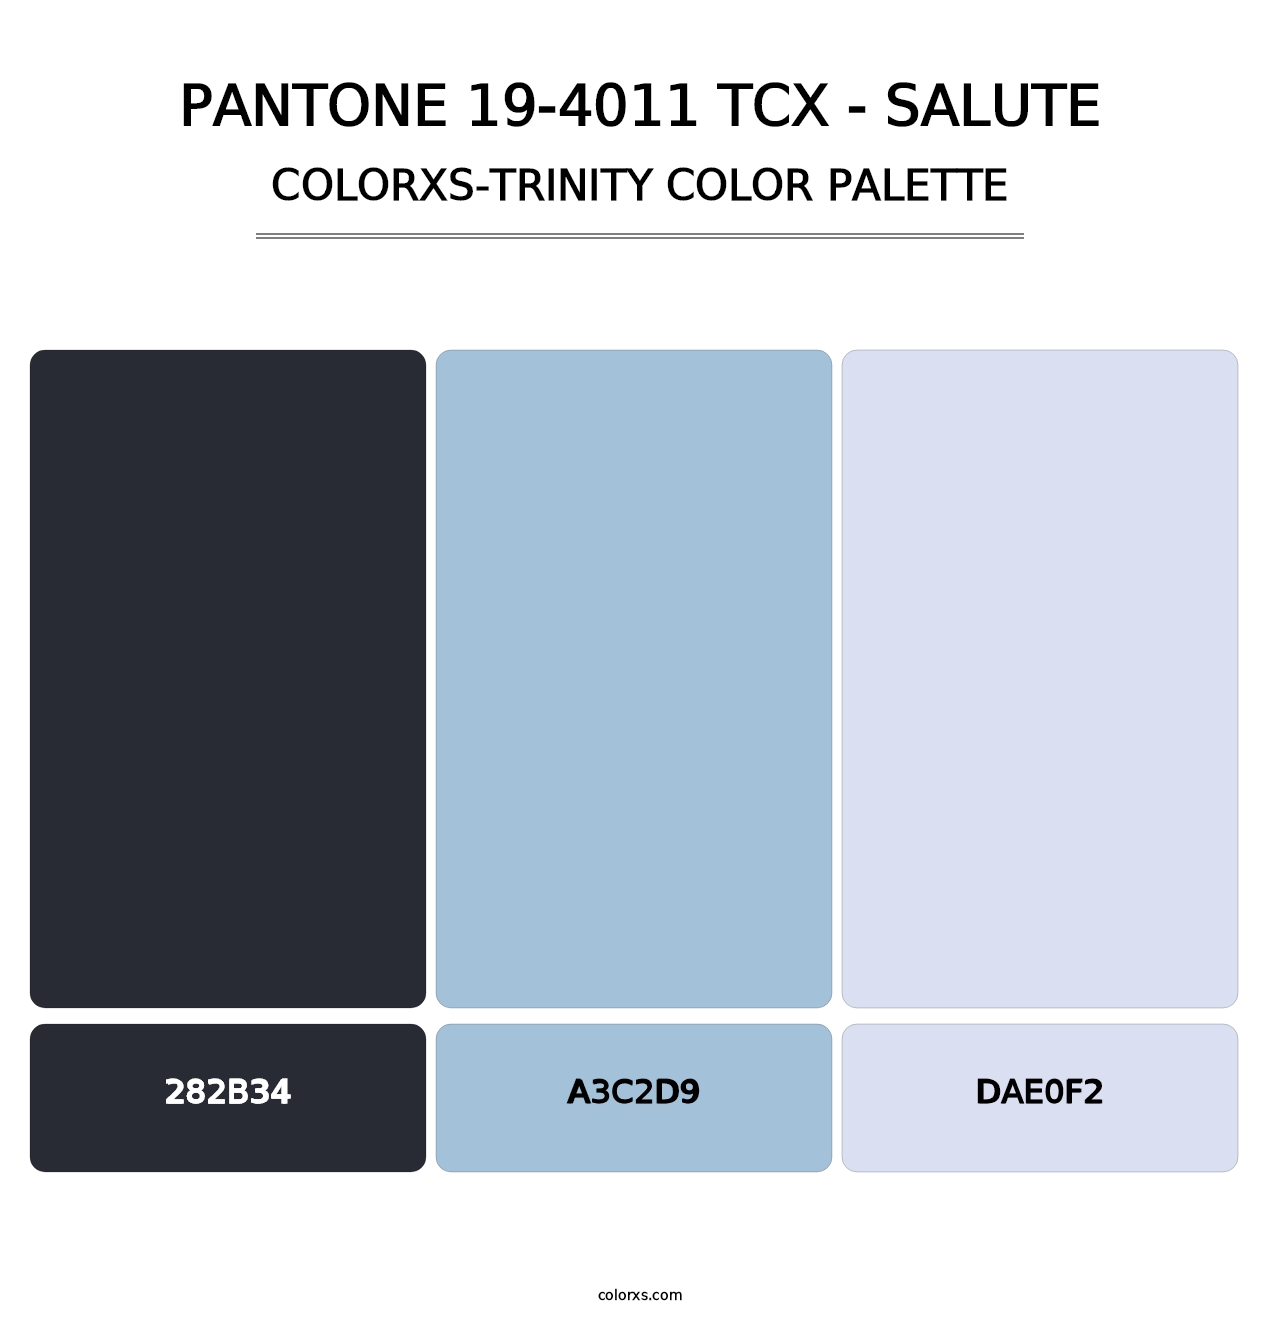 PANTONE 19-4011 TCX - Salute - Colorxs Trinity Palette